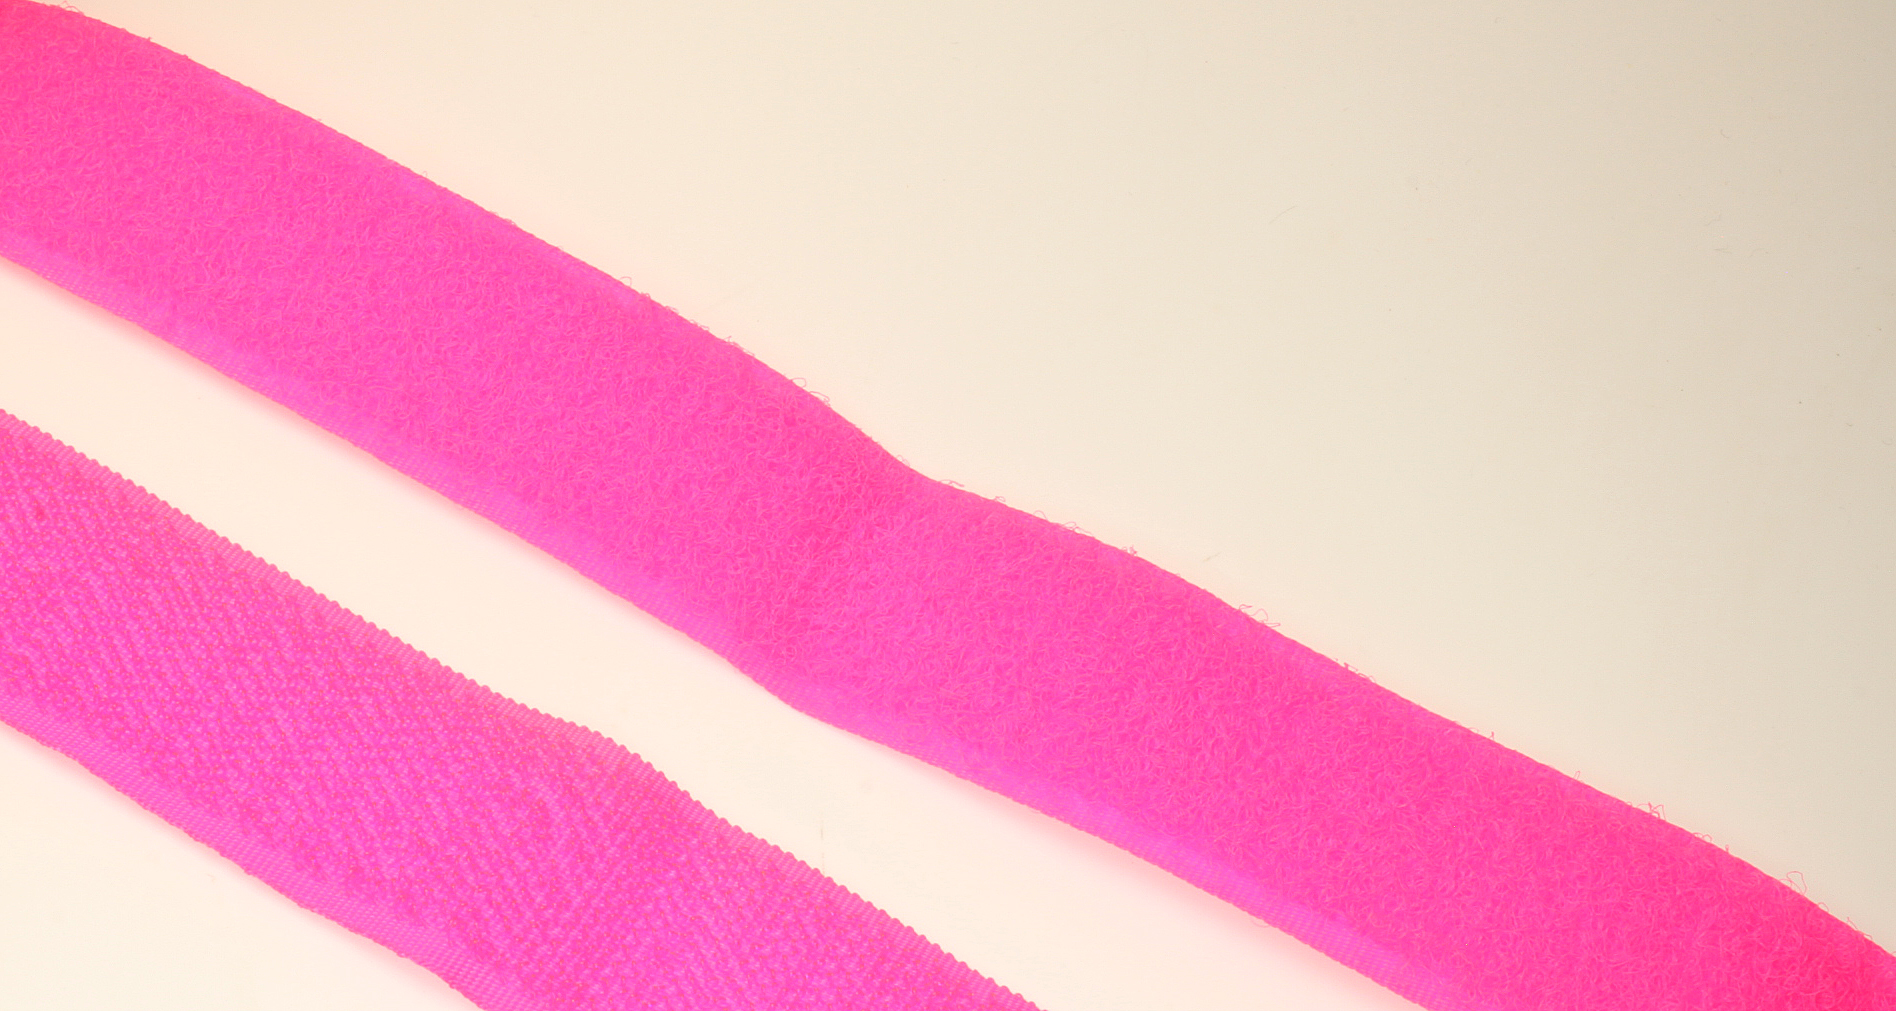 Klettband zum Nähen rosa 08 20mm breit Flausch & Haken 4 Meter